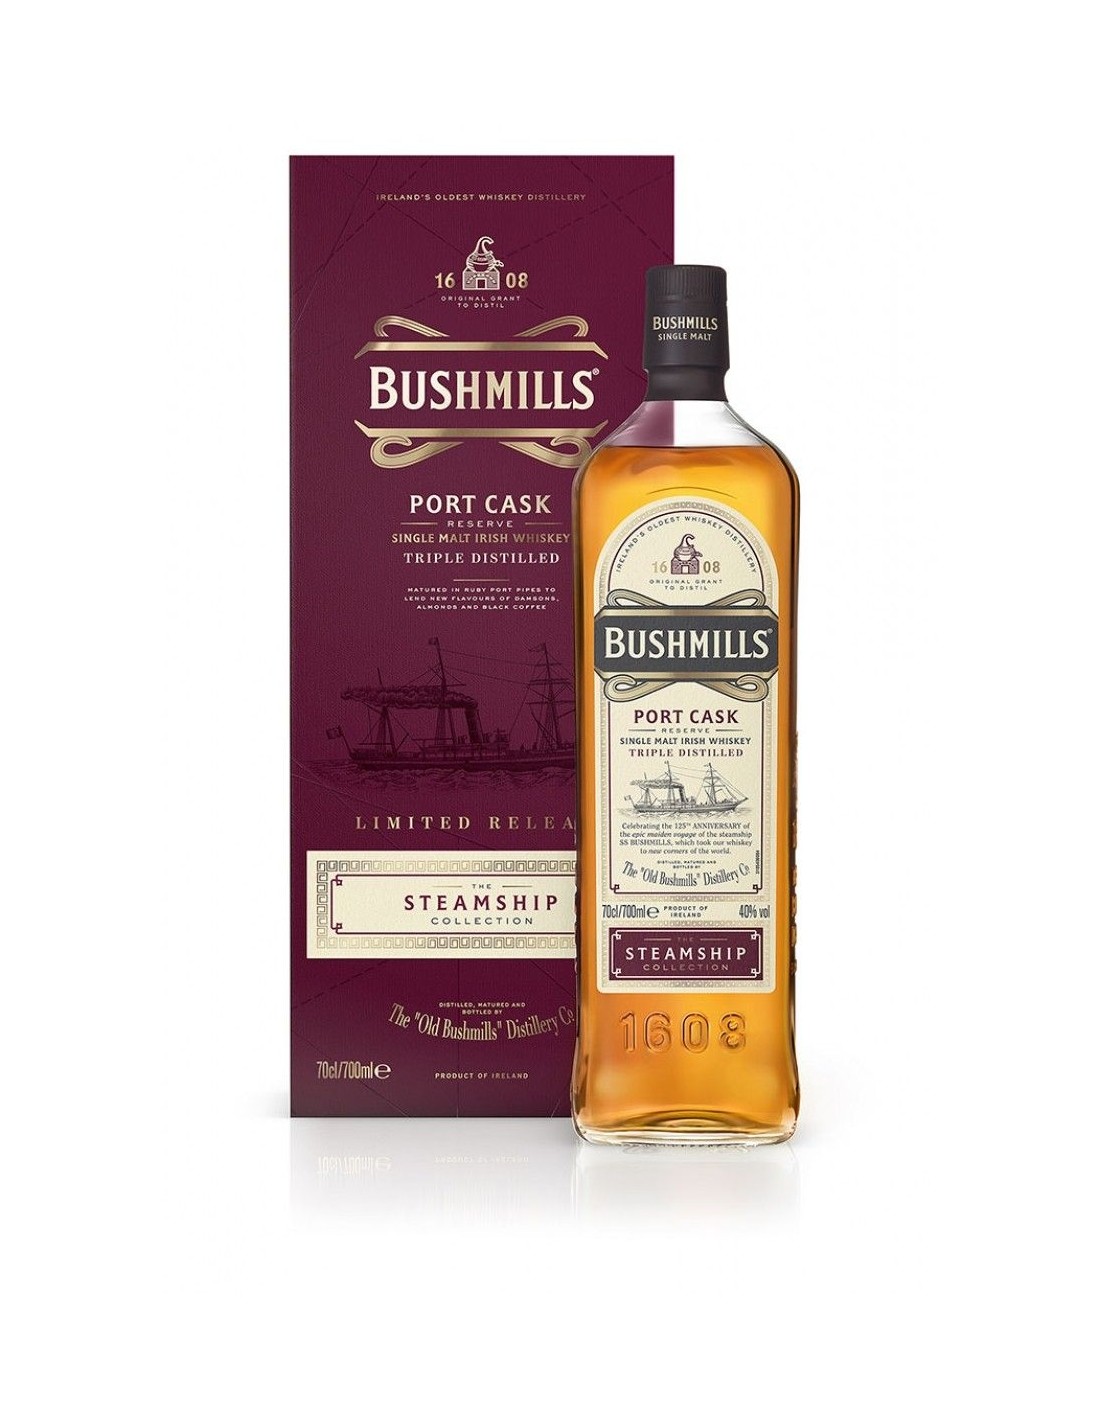 Whisky Bushmills The Steamship Port Cask, 0.7L, 40% alc., Irlanda alcooldiscount.ro